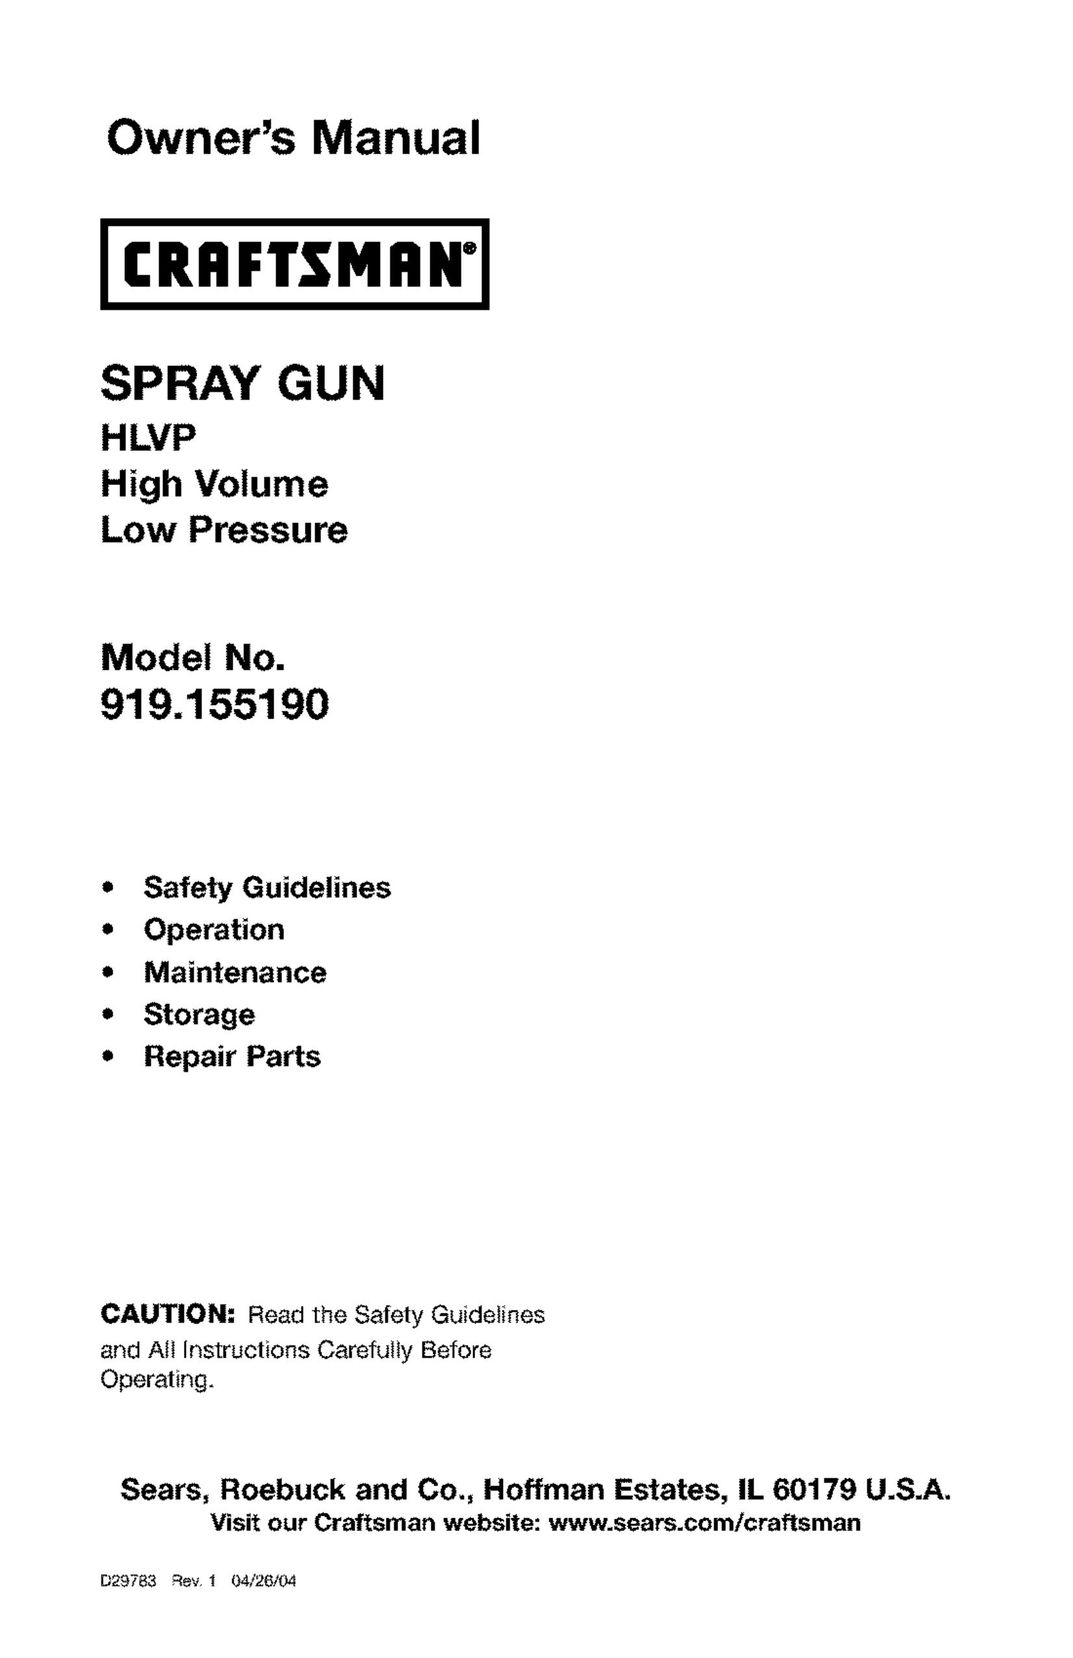 Craftsman 919.15519 Paint Sprayer User Manual